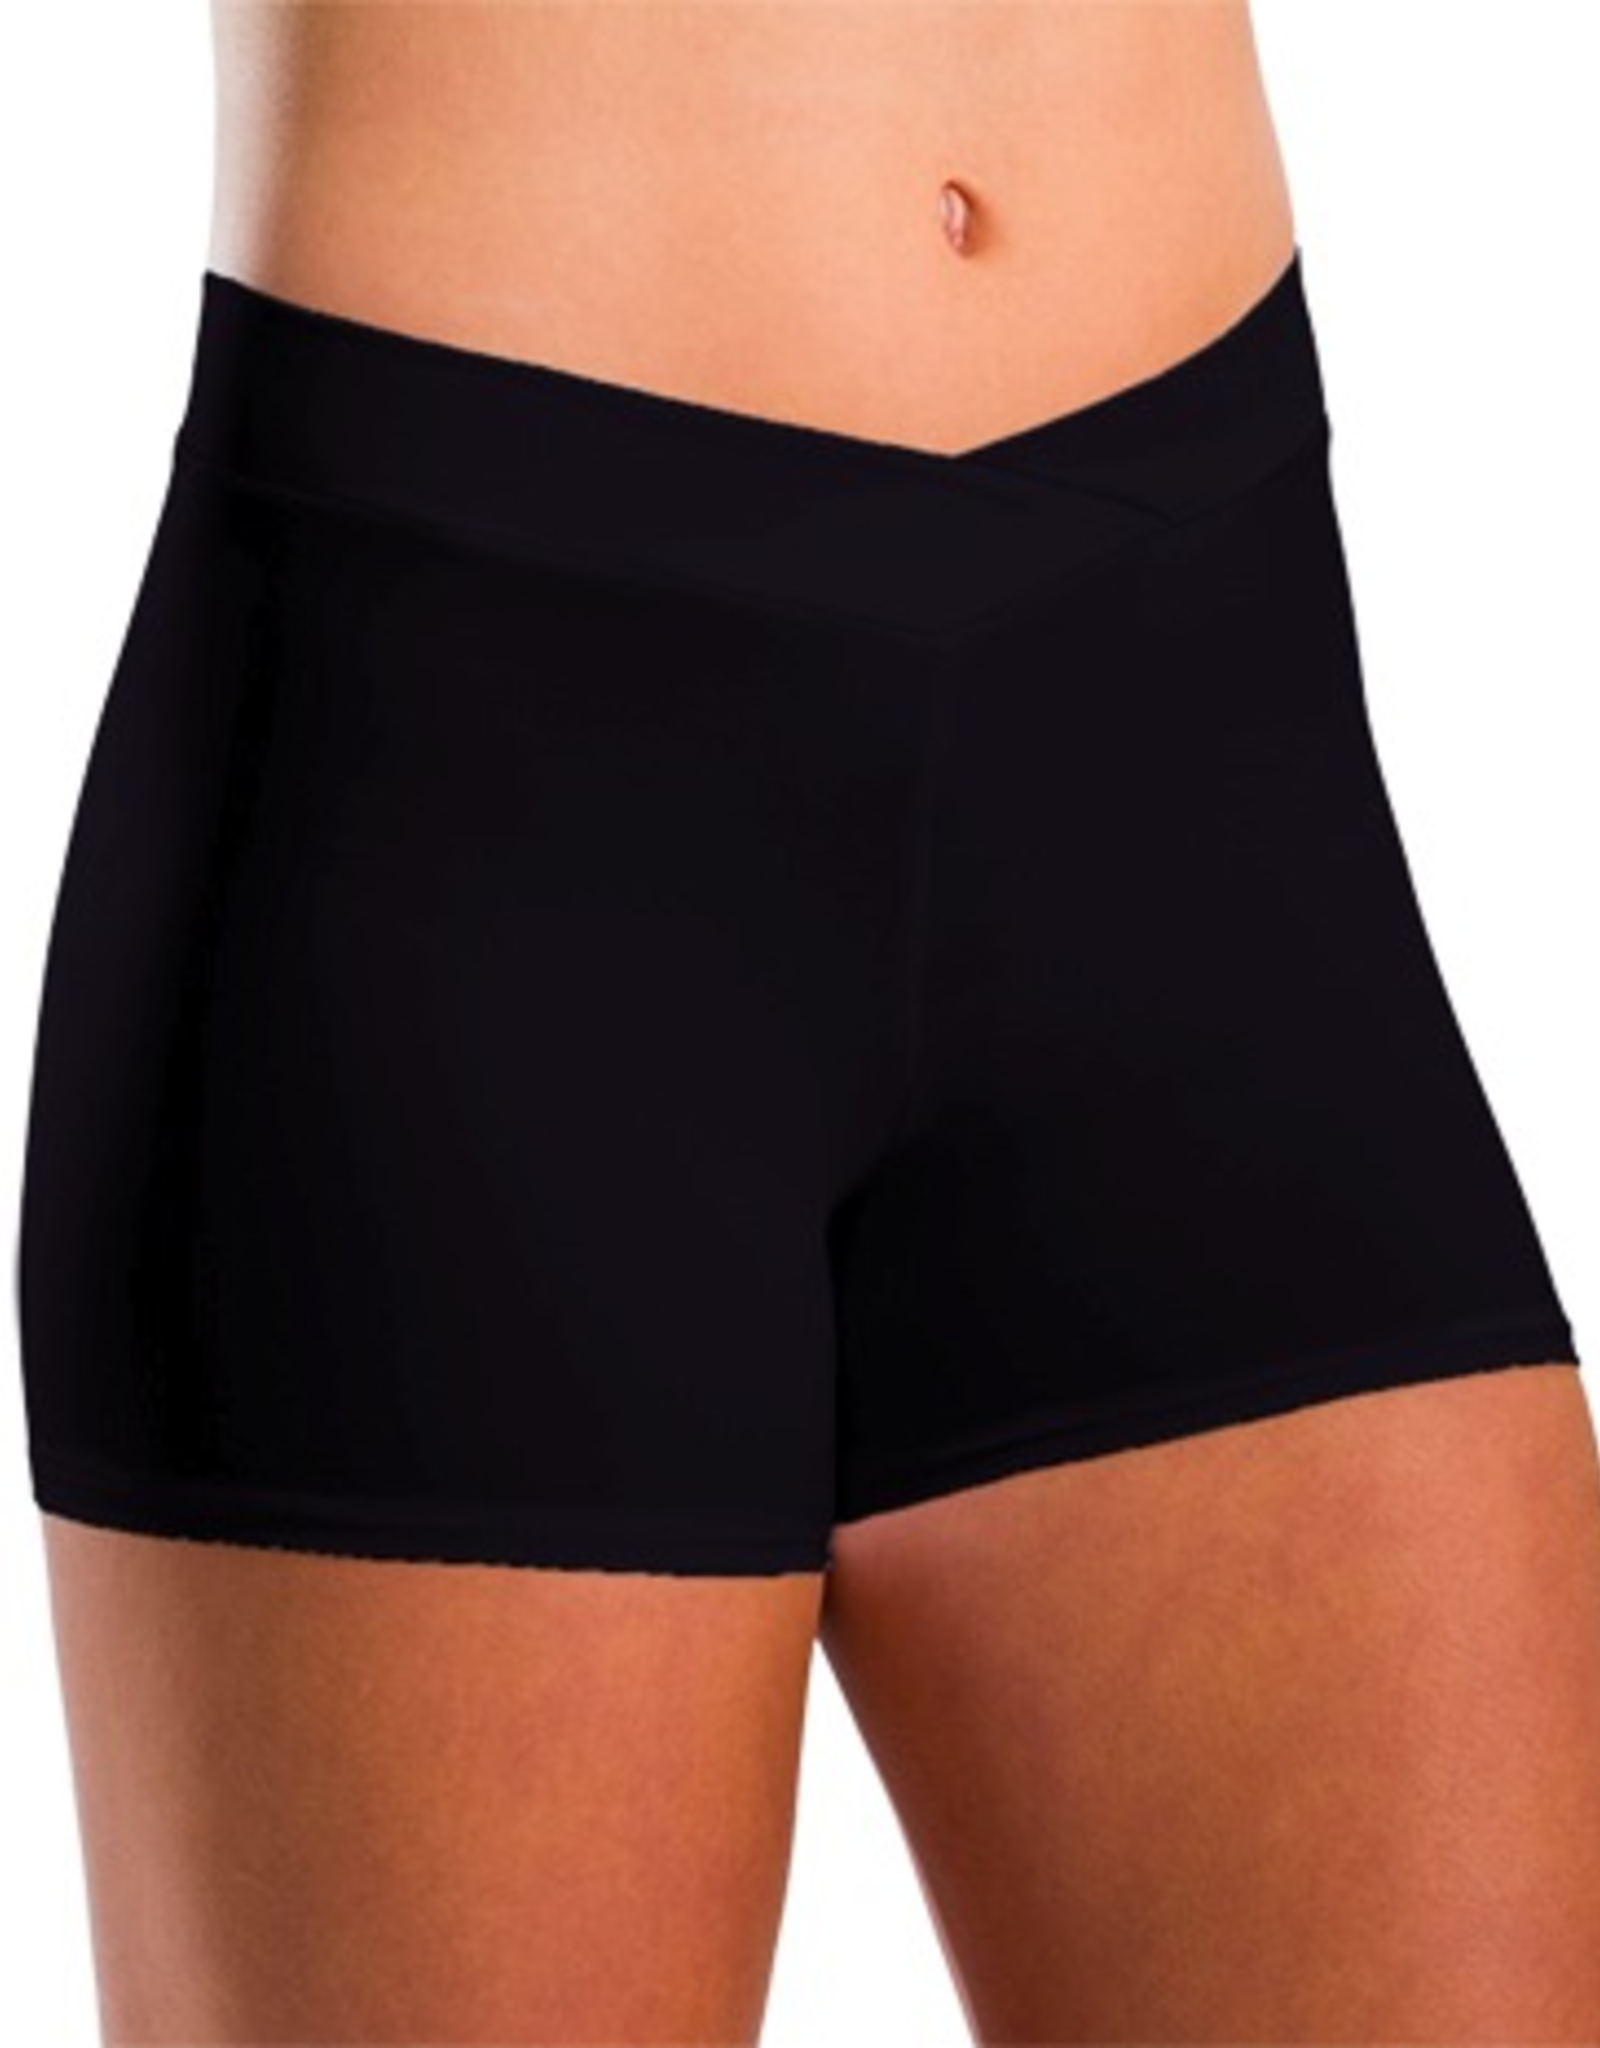 Motionwear V-Waist Shorts Adult 7113